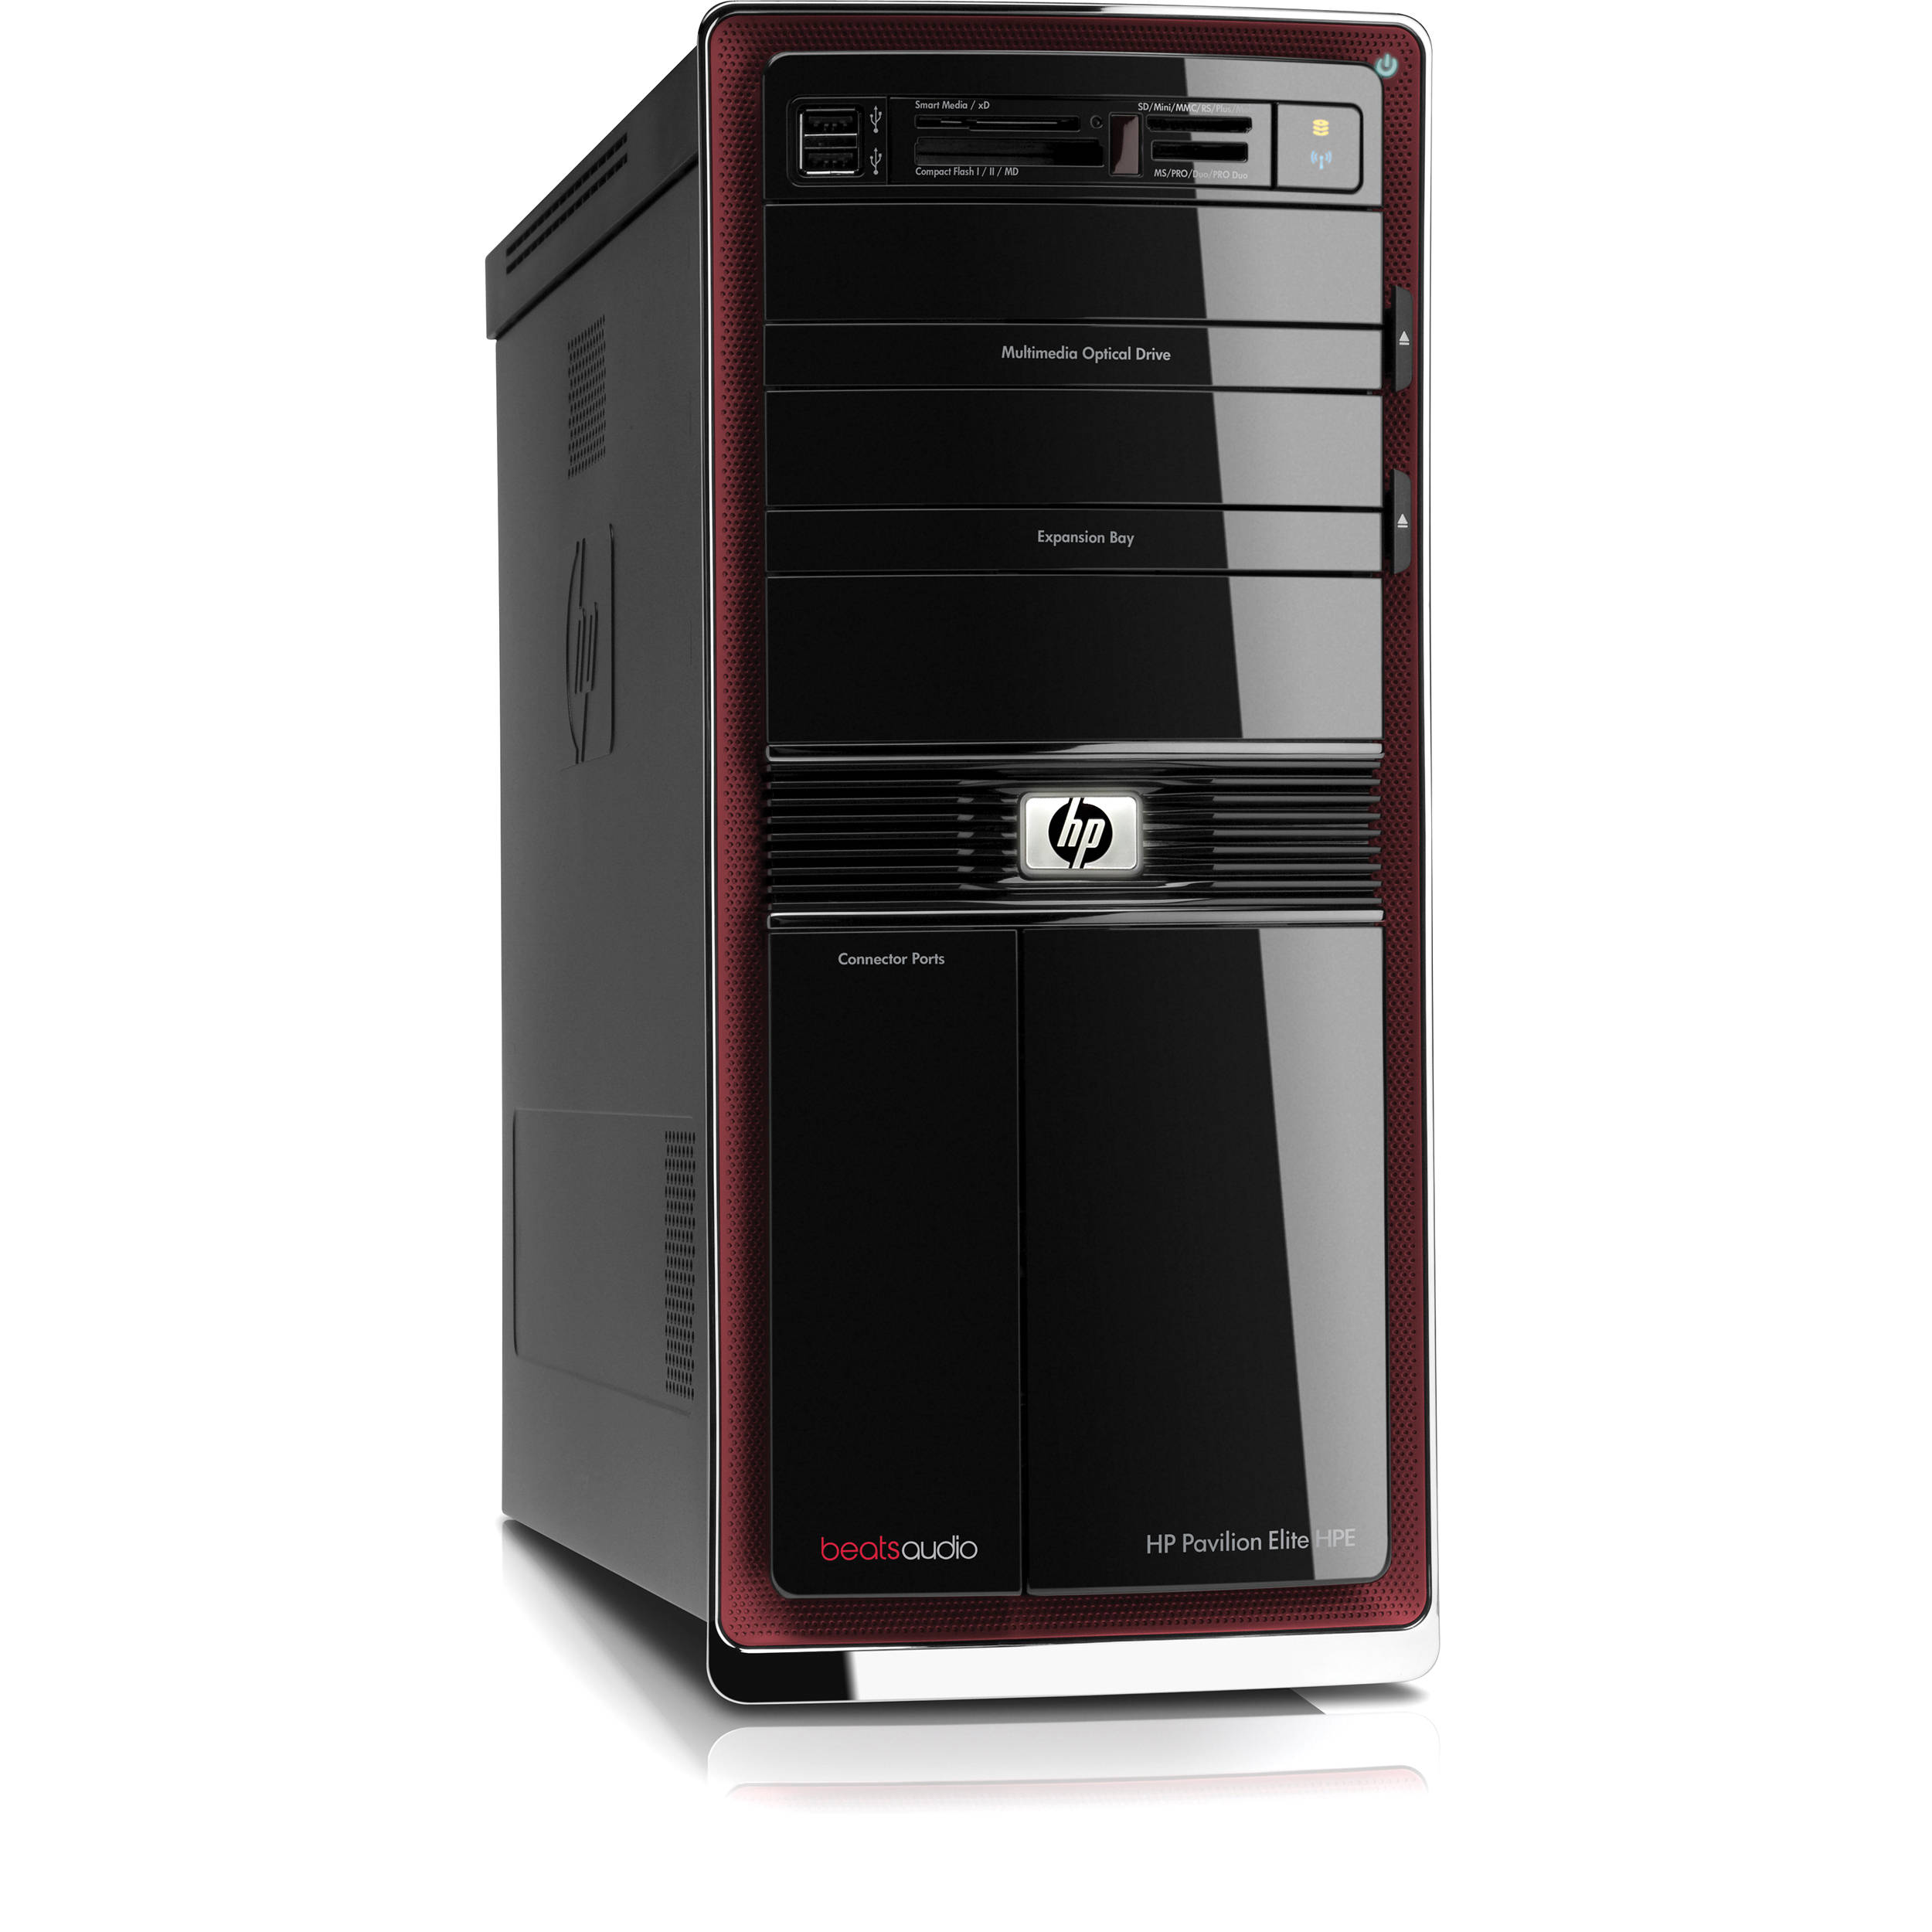 Pavilion Elite HPE-470be Desktop PC